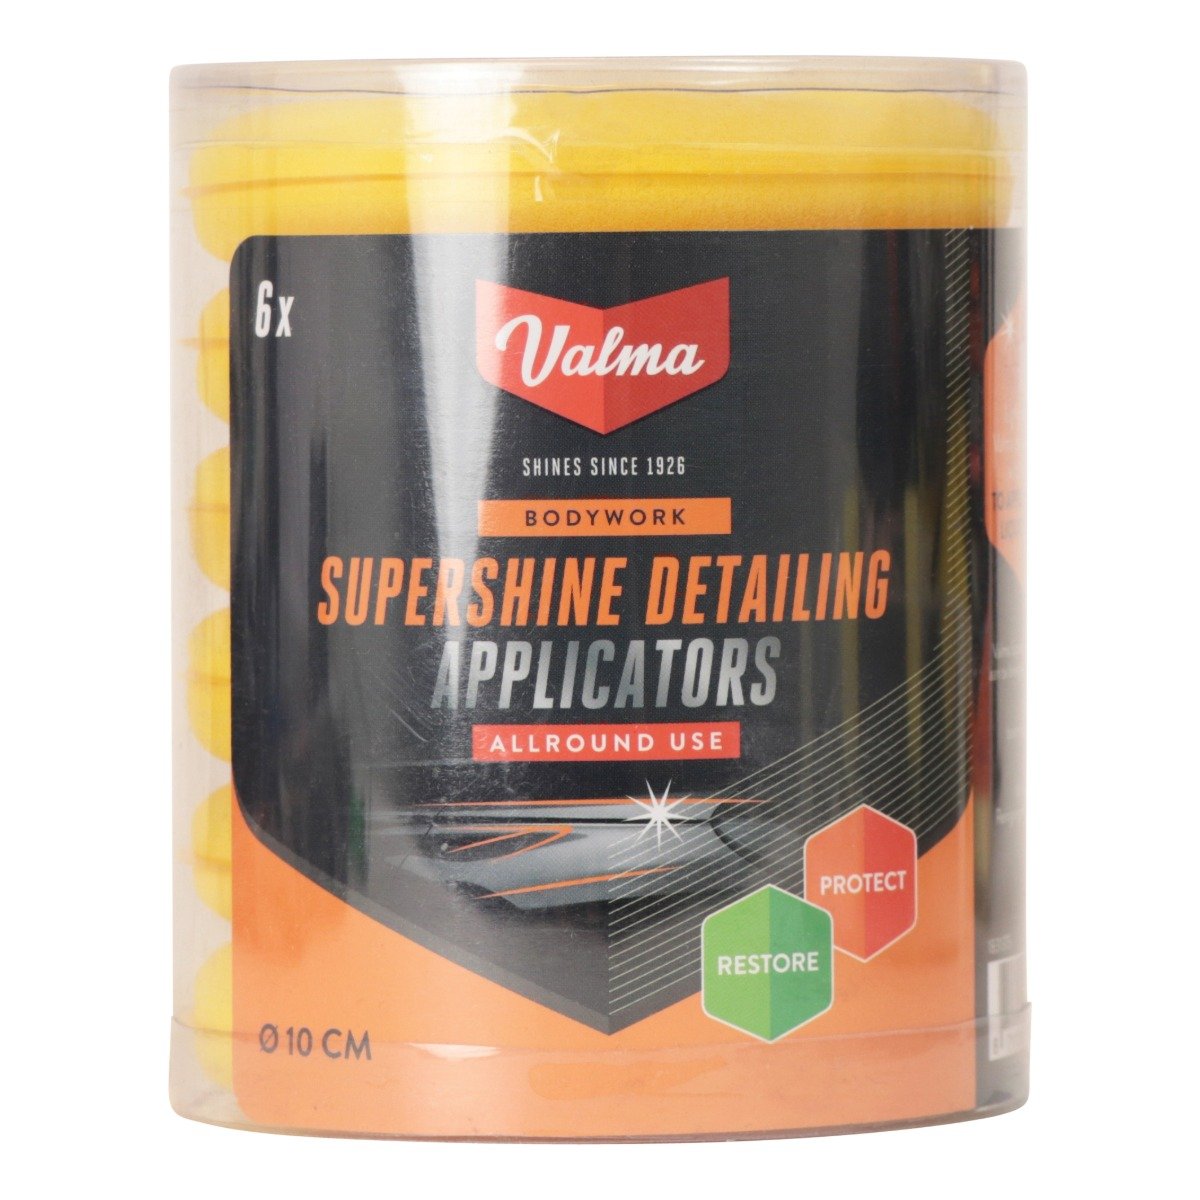 Supershine Detailing Applicators - 6-pack